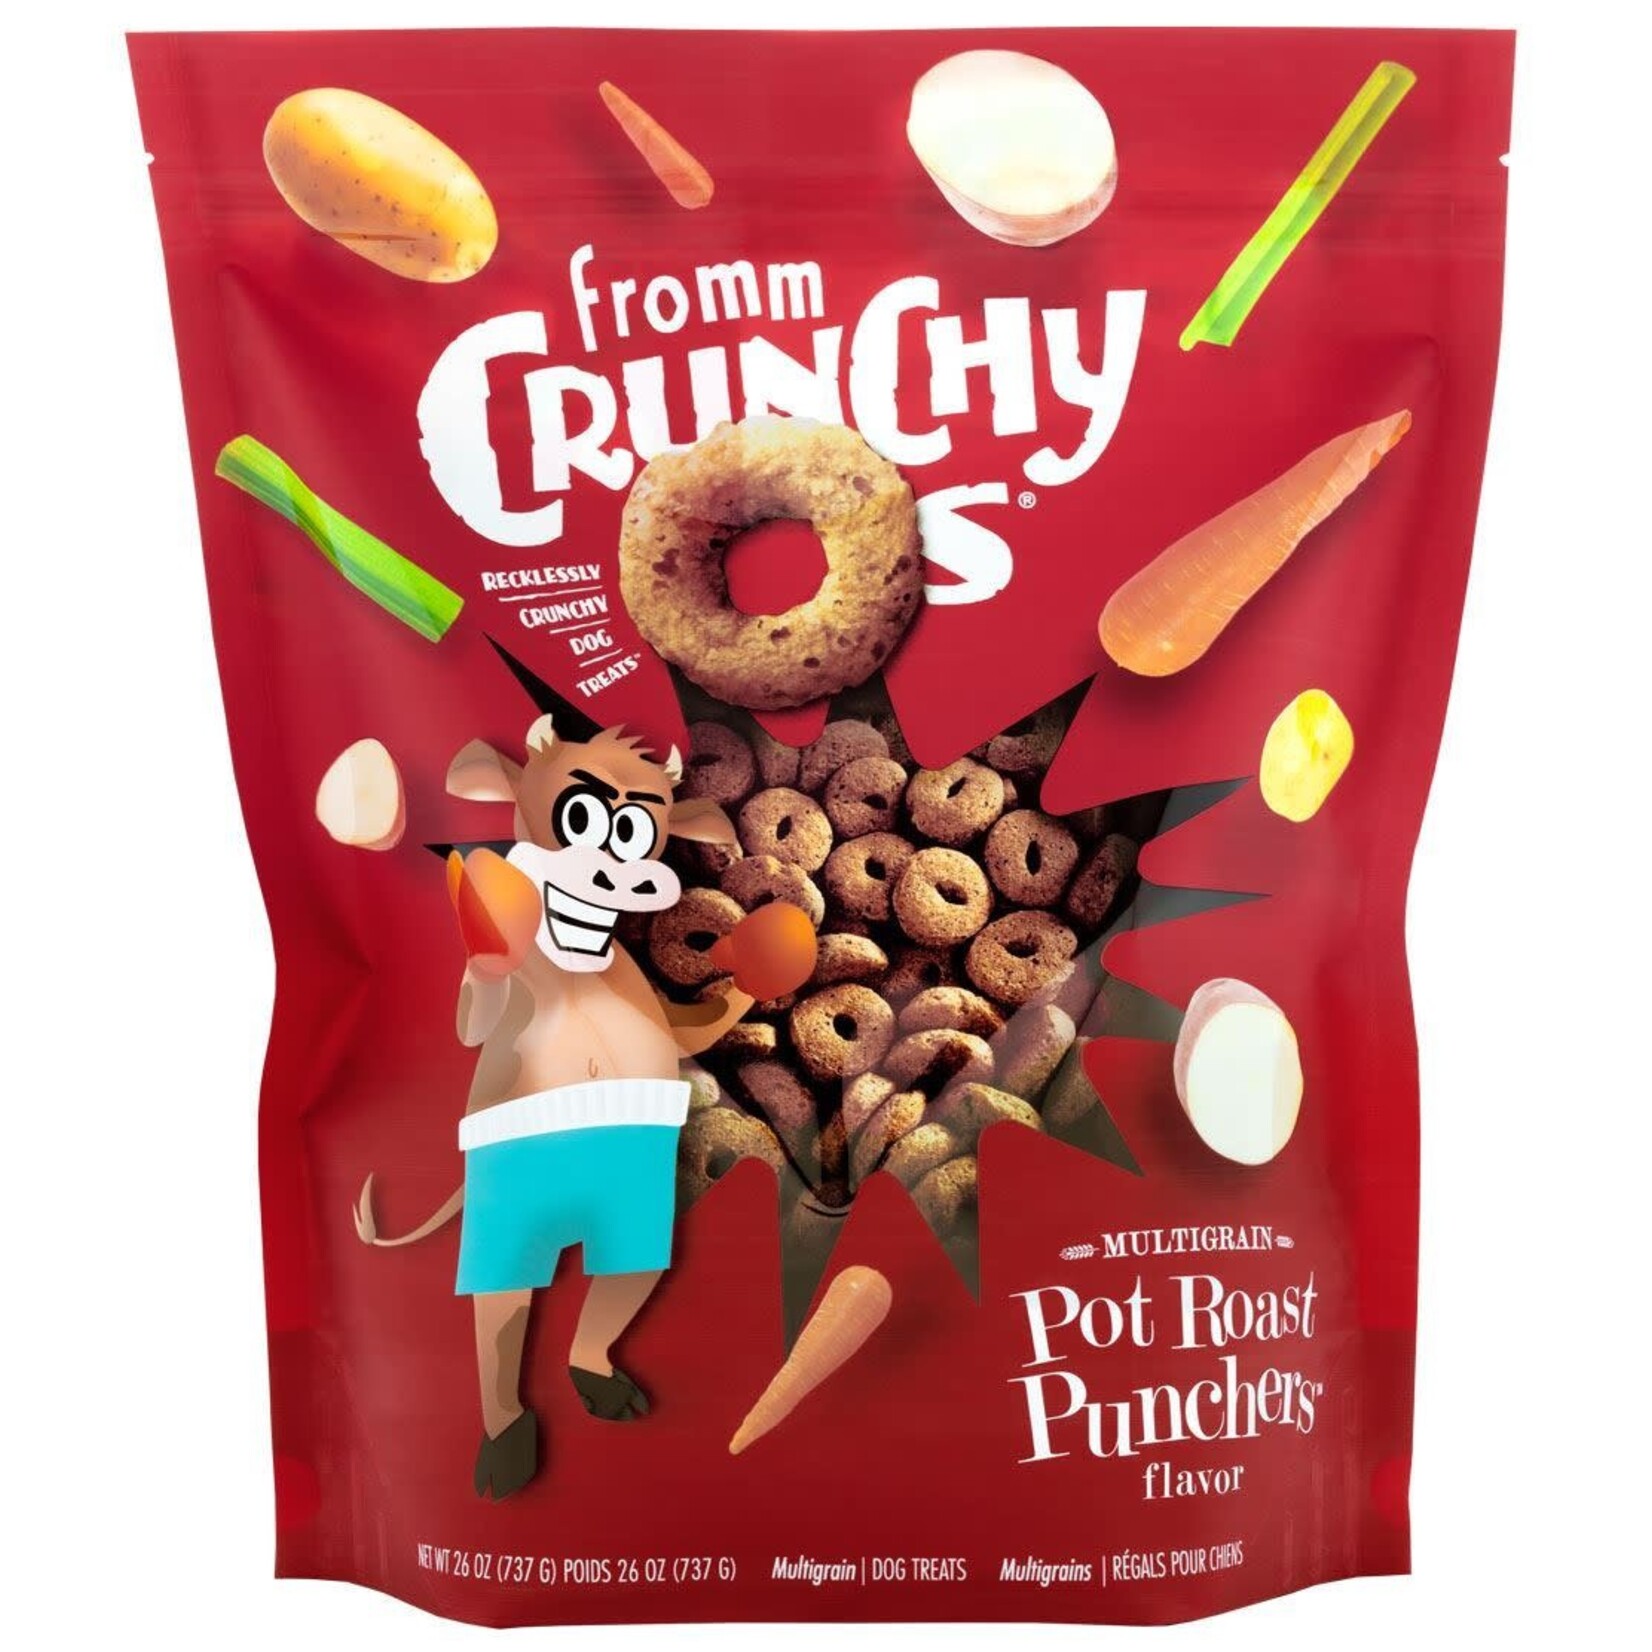 Fromm Crunchy Os Pot Roast Punchers Flavor Dog Treats